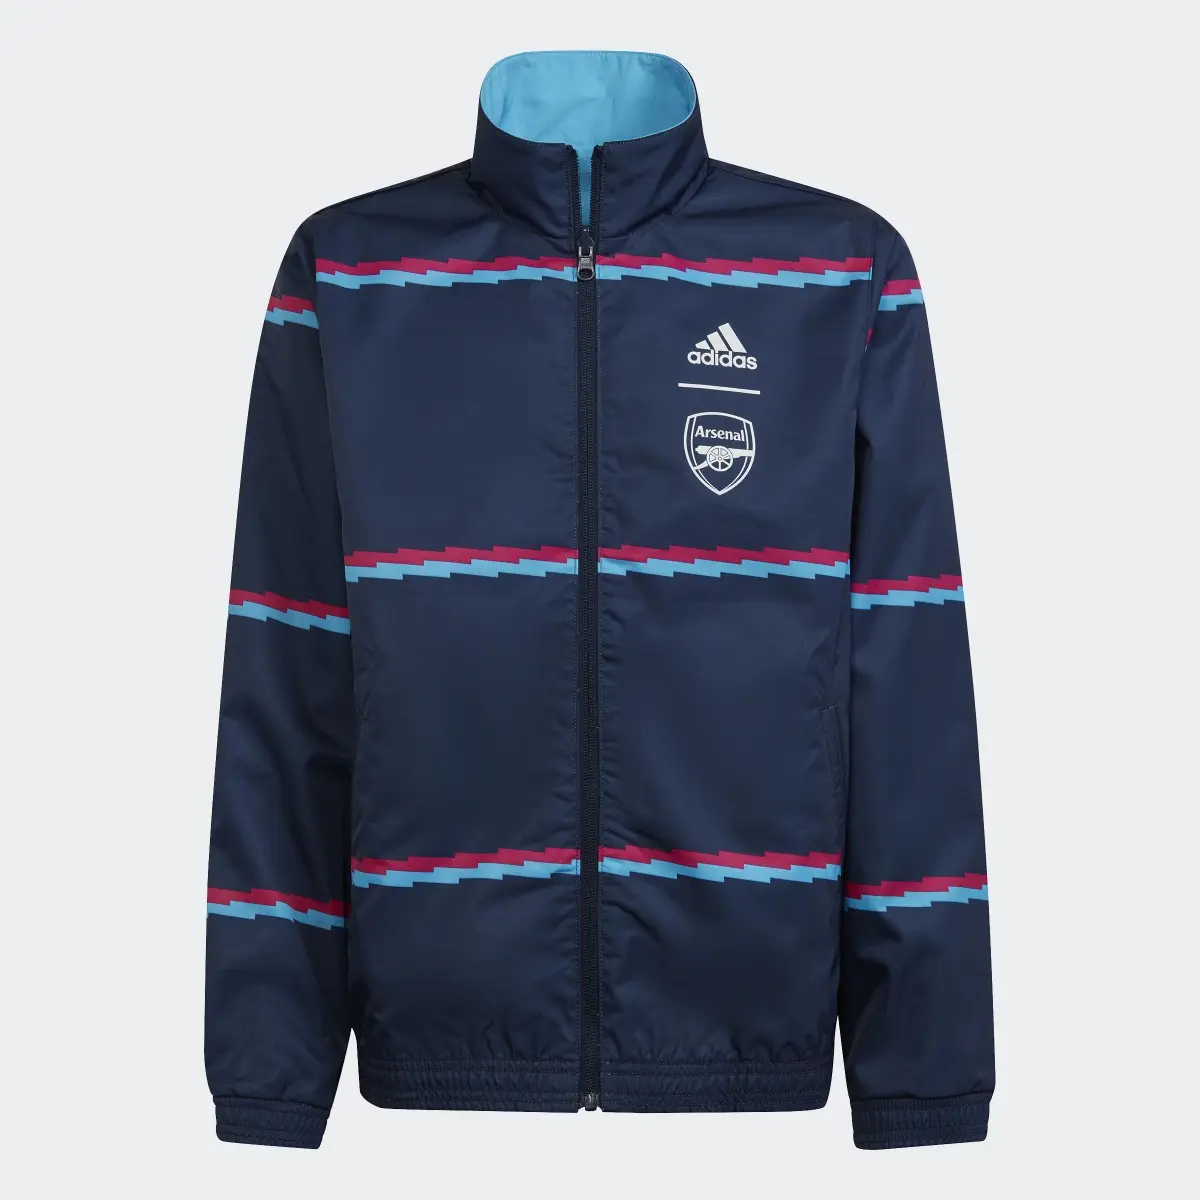 Adidas Arsenal Anthem Jacket. 3